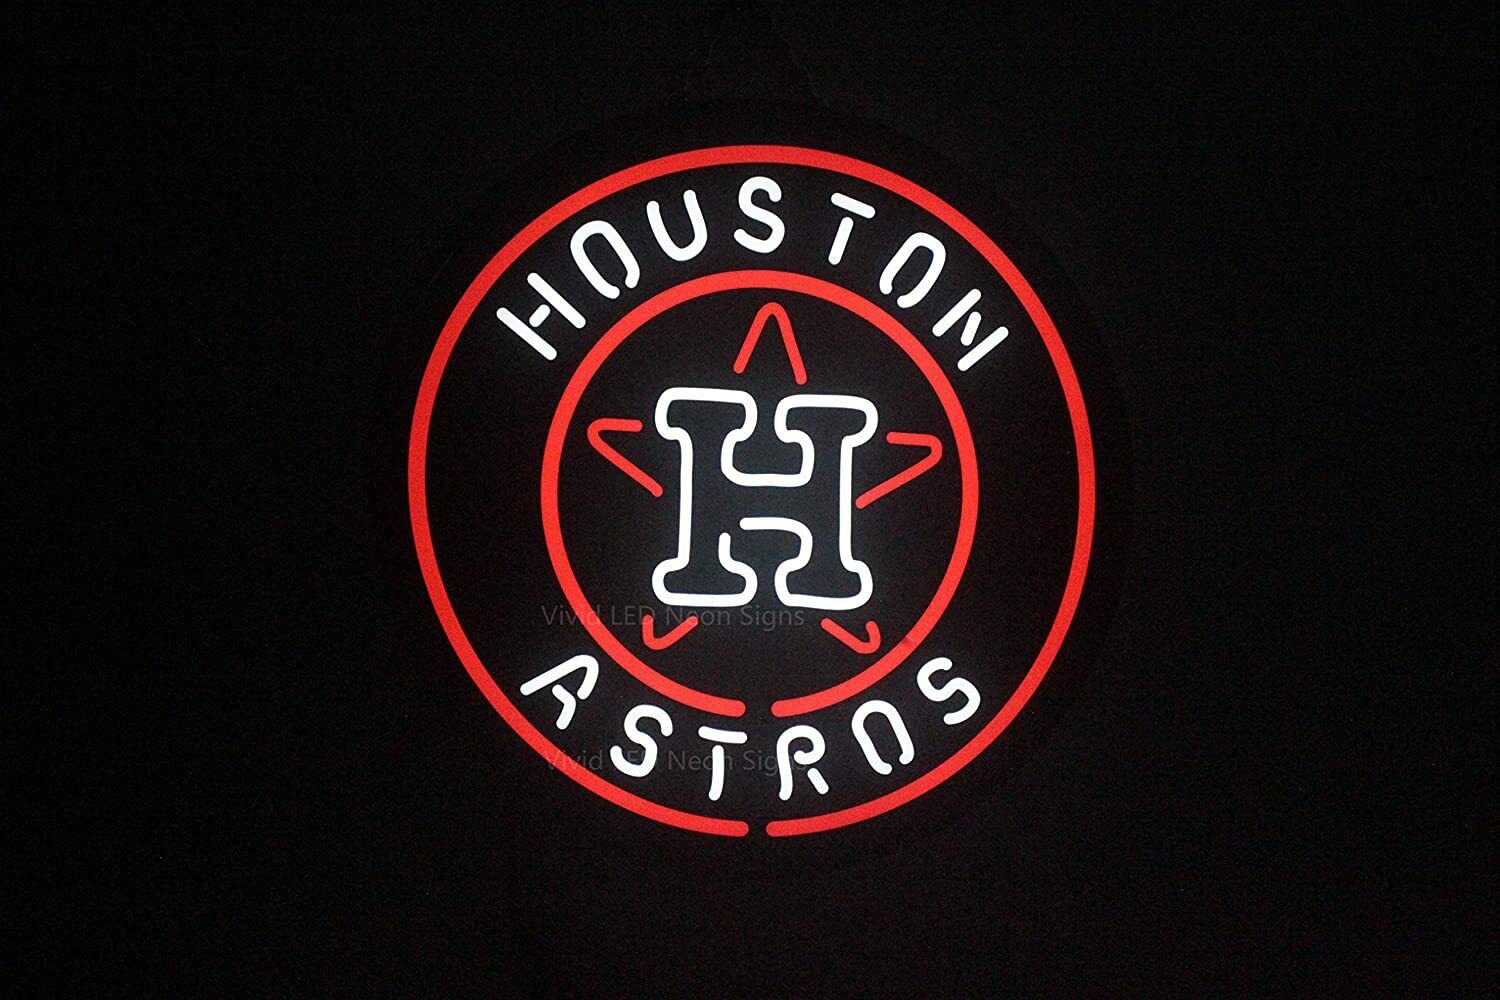 New Houston Astros World Series Vivid LED Neon Sign Light Lamp Super Bright 10\